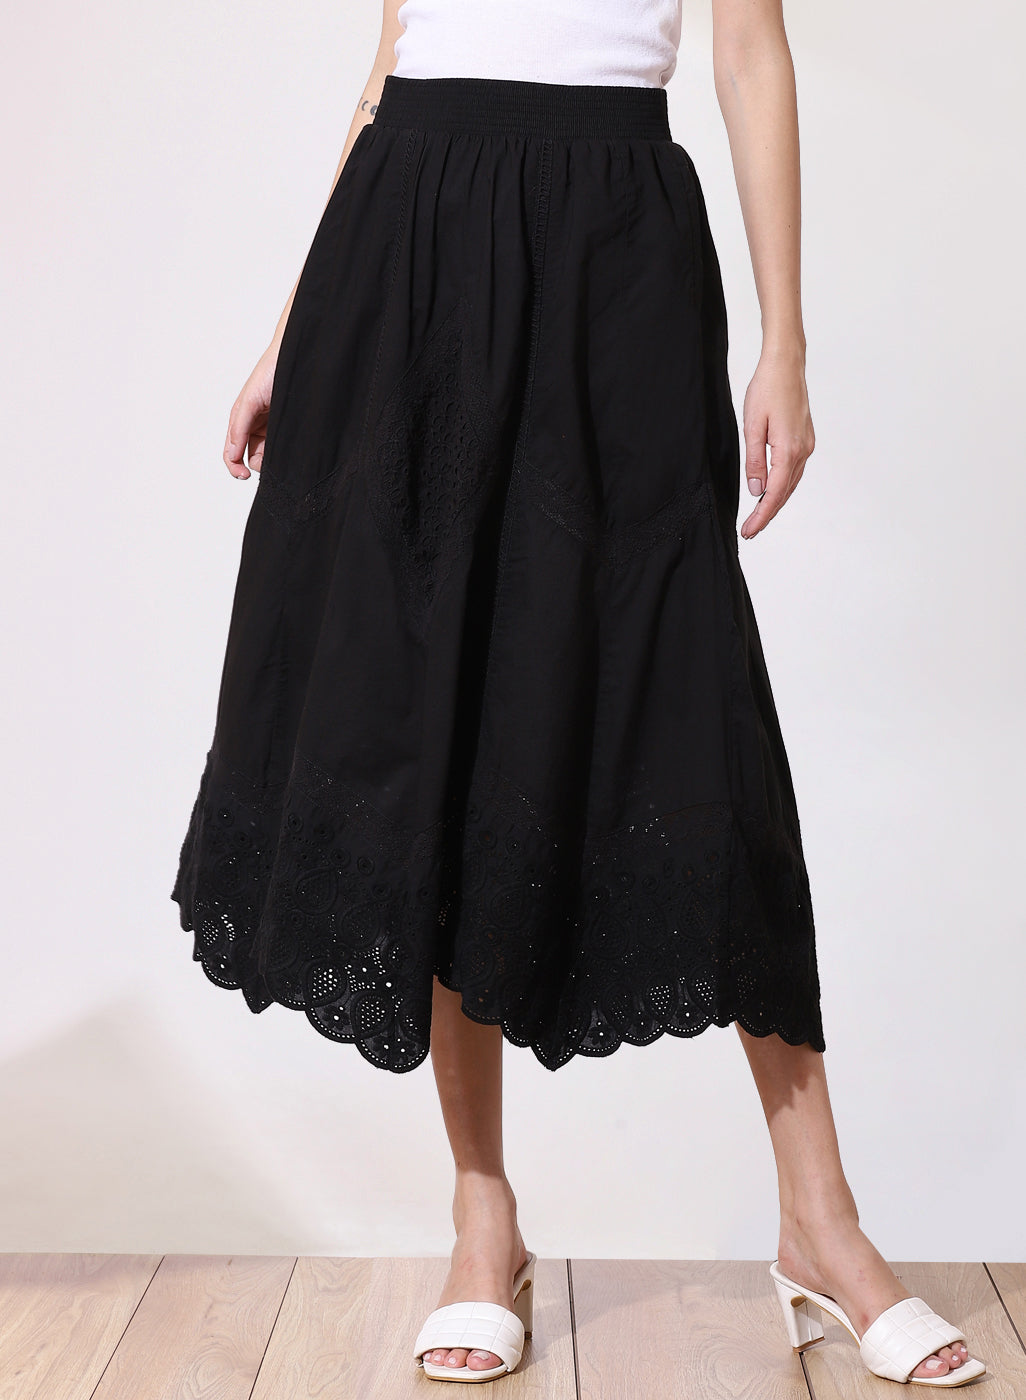 Black Cotton Skirt